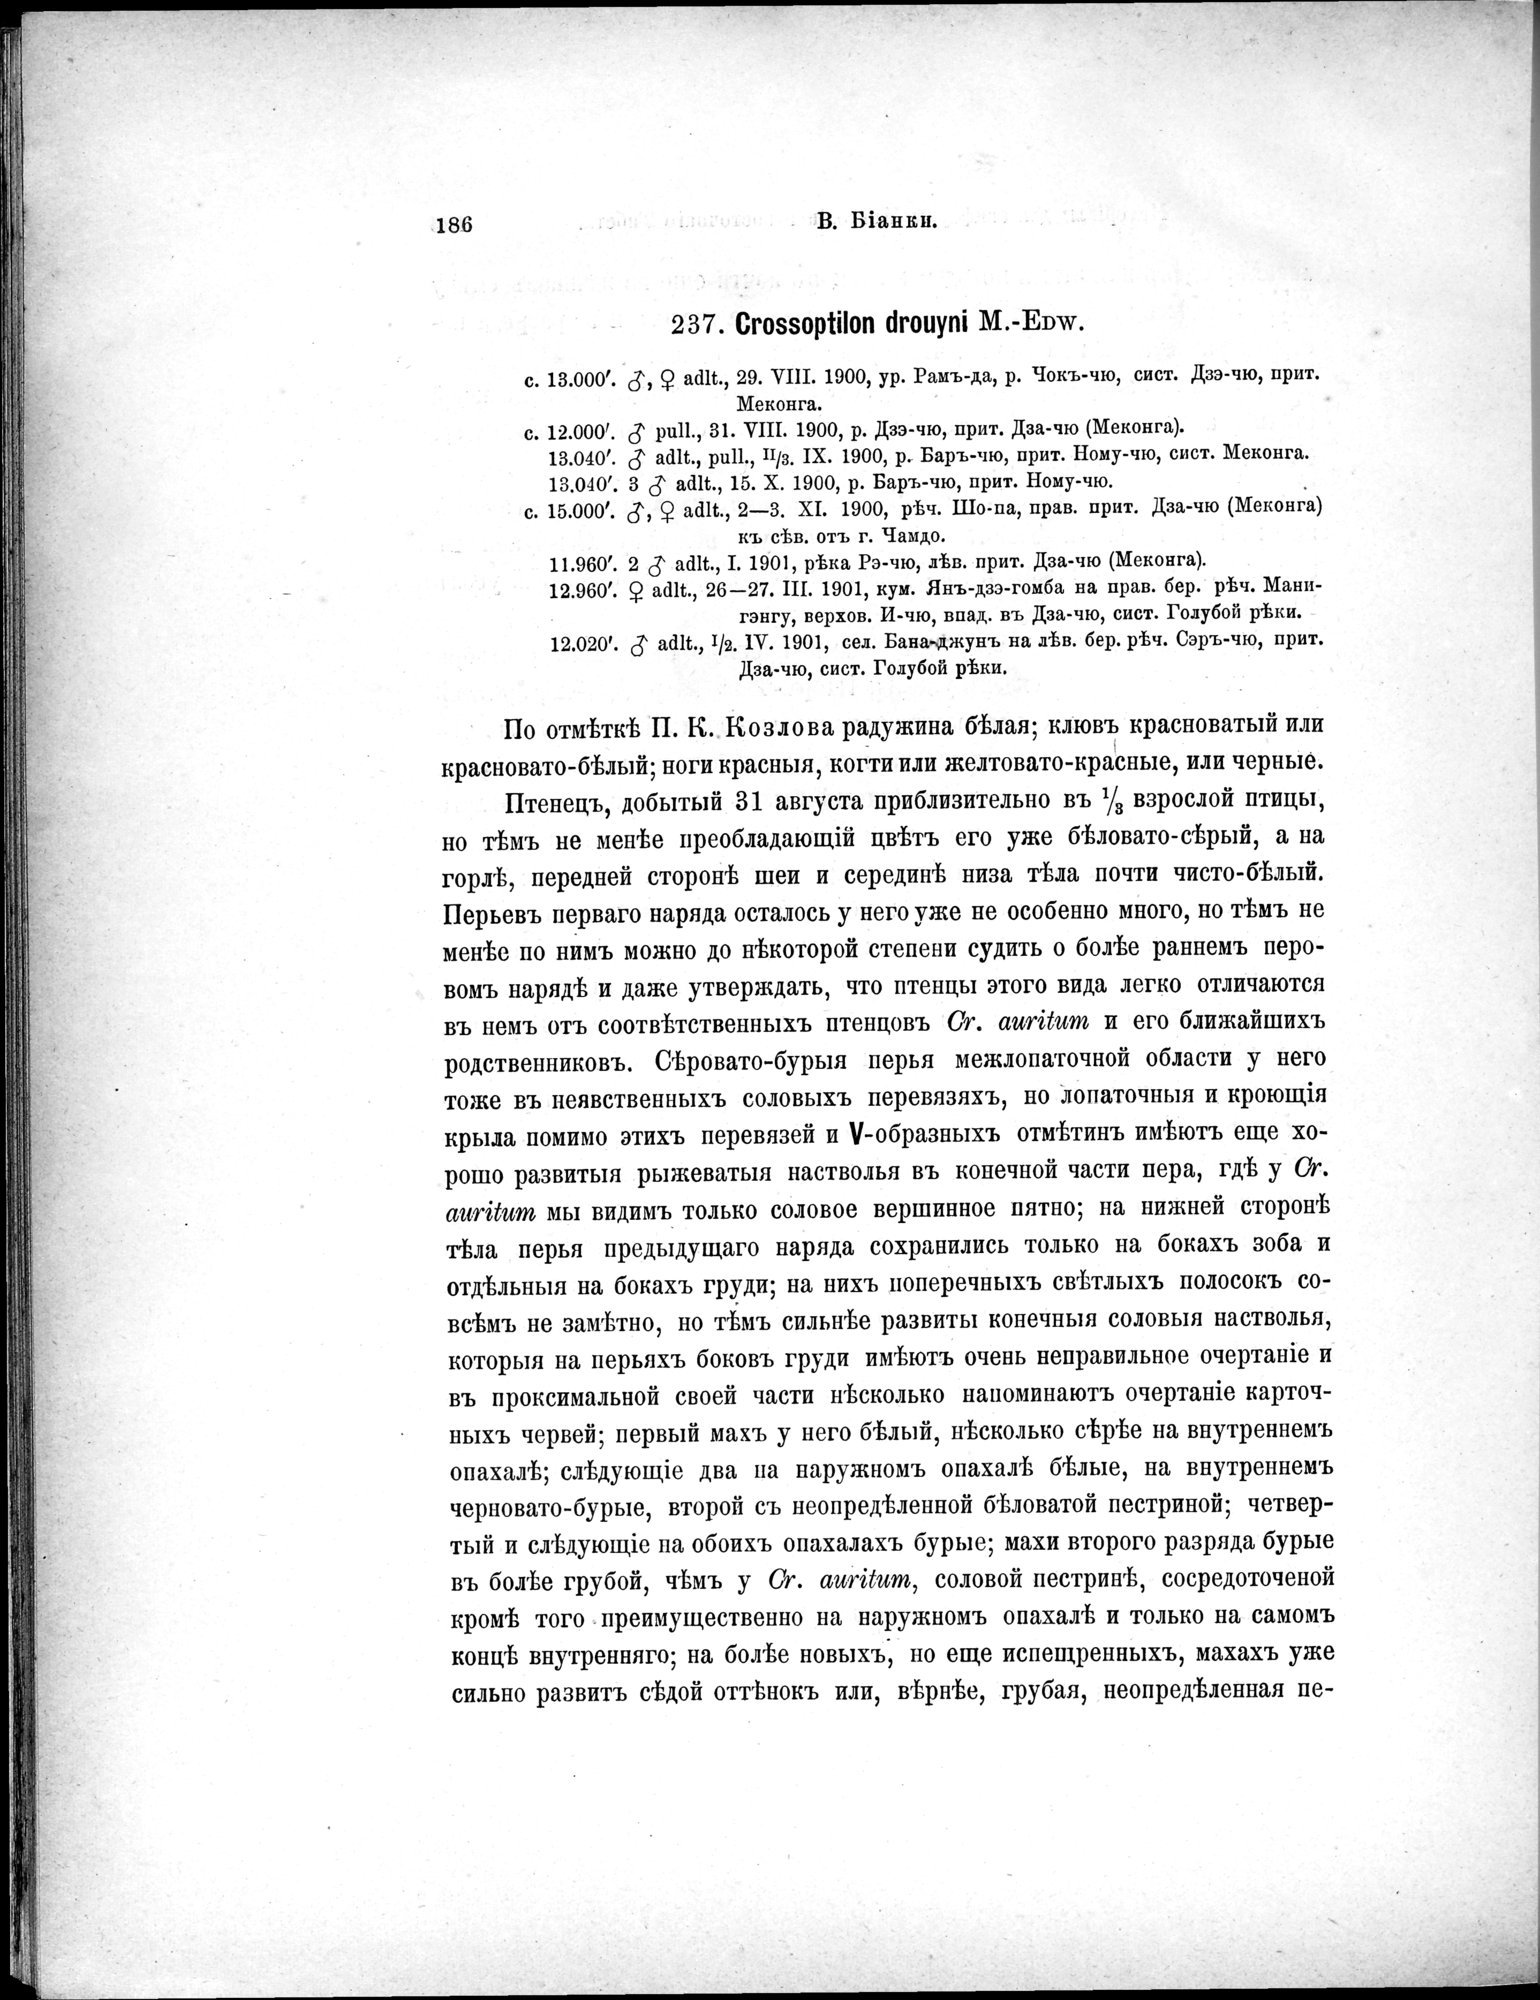 Mongoliia i Kam : vol.5 / Page 258 (Grayscale High Resolution Image)